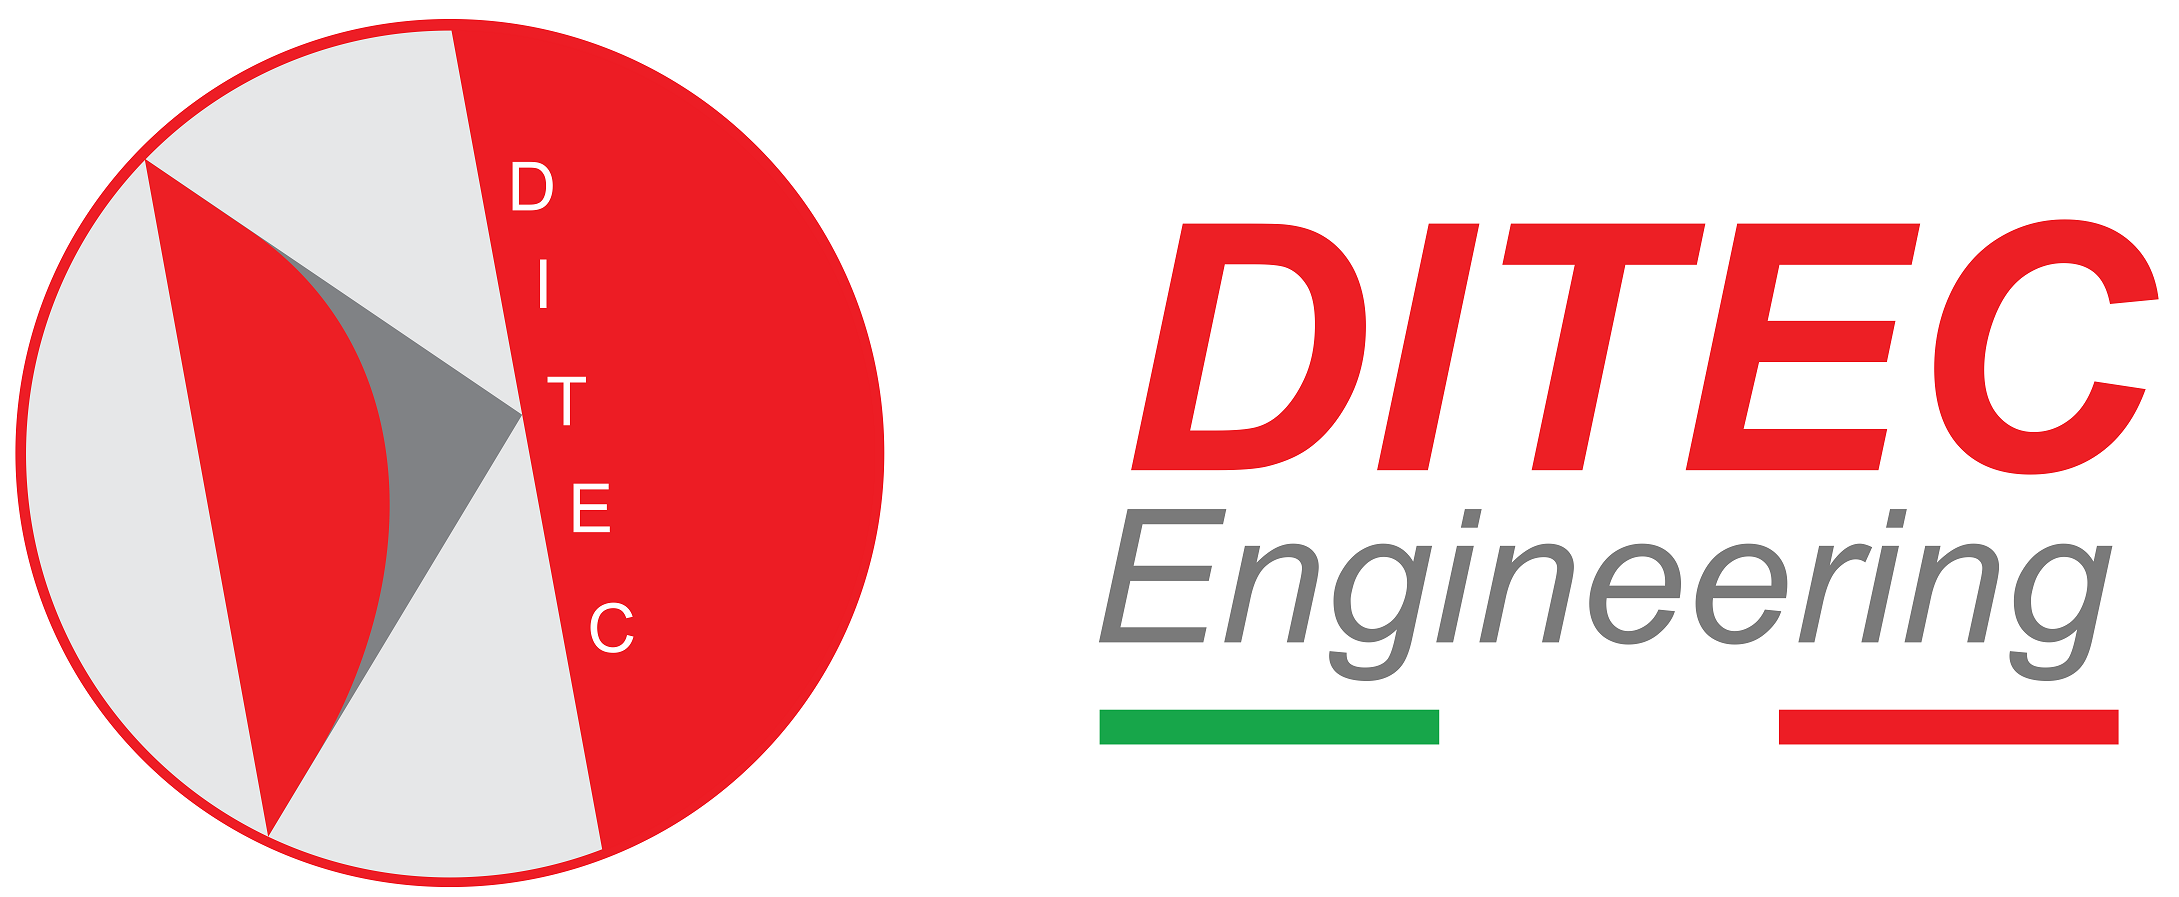 DITEC Engineering